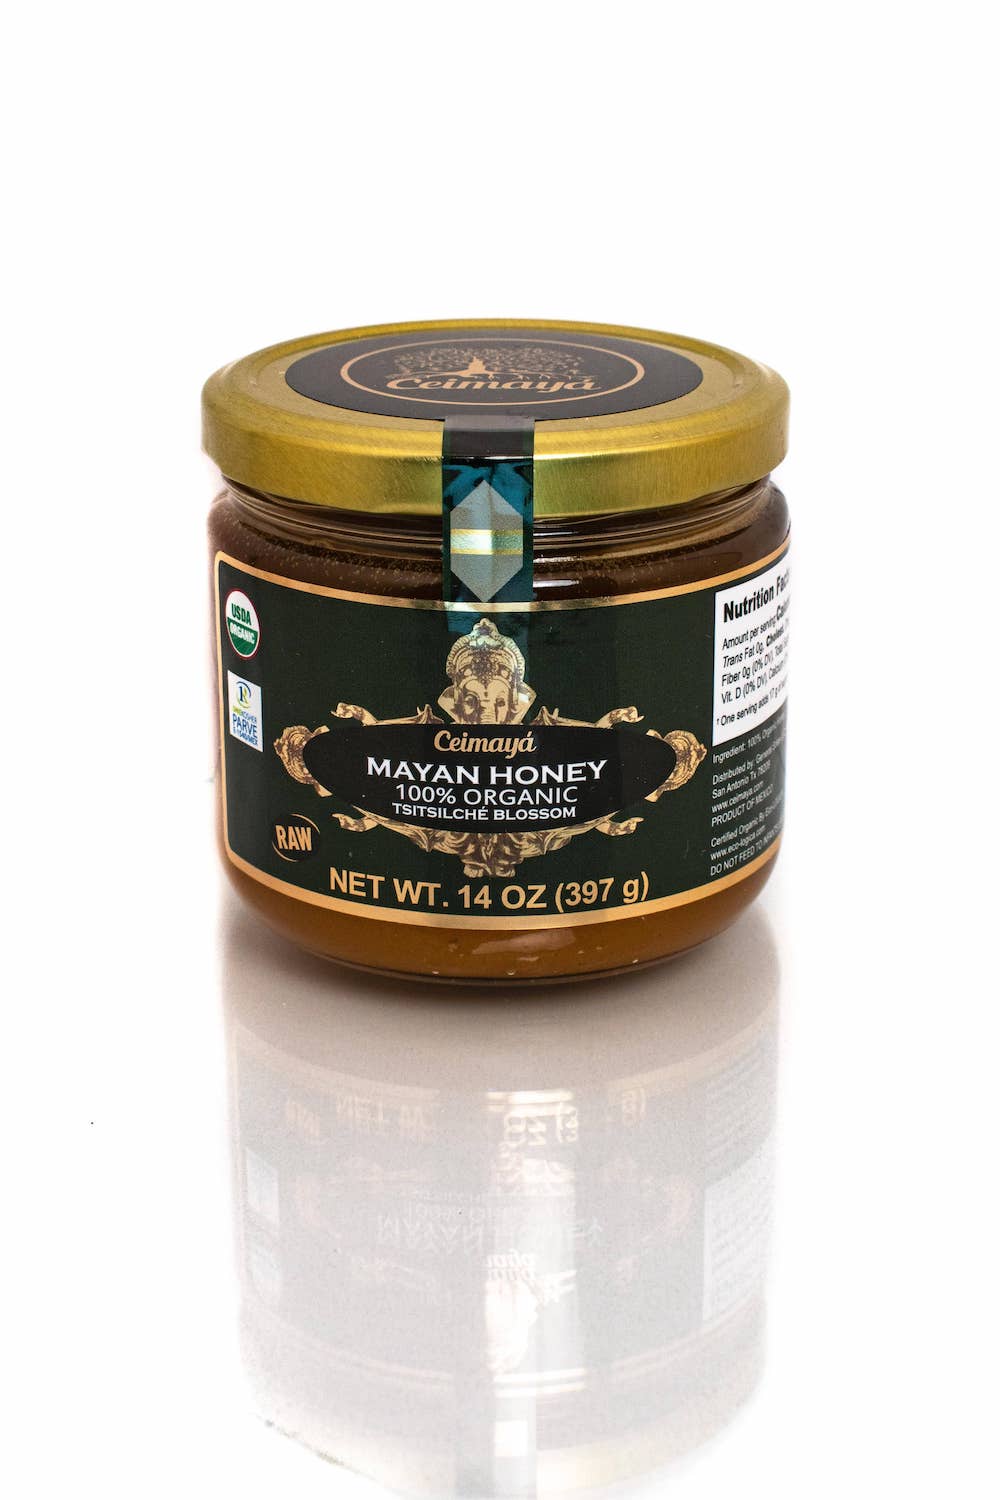 Mayan Honey - 100% Organic, Tsitsilché Blossom 14 oz